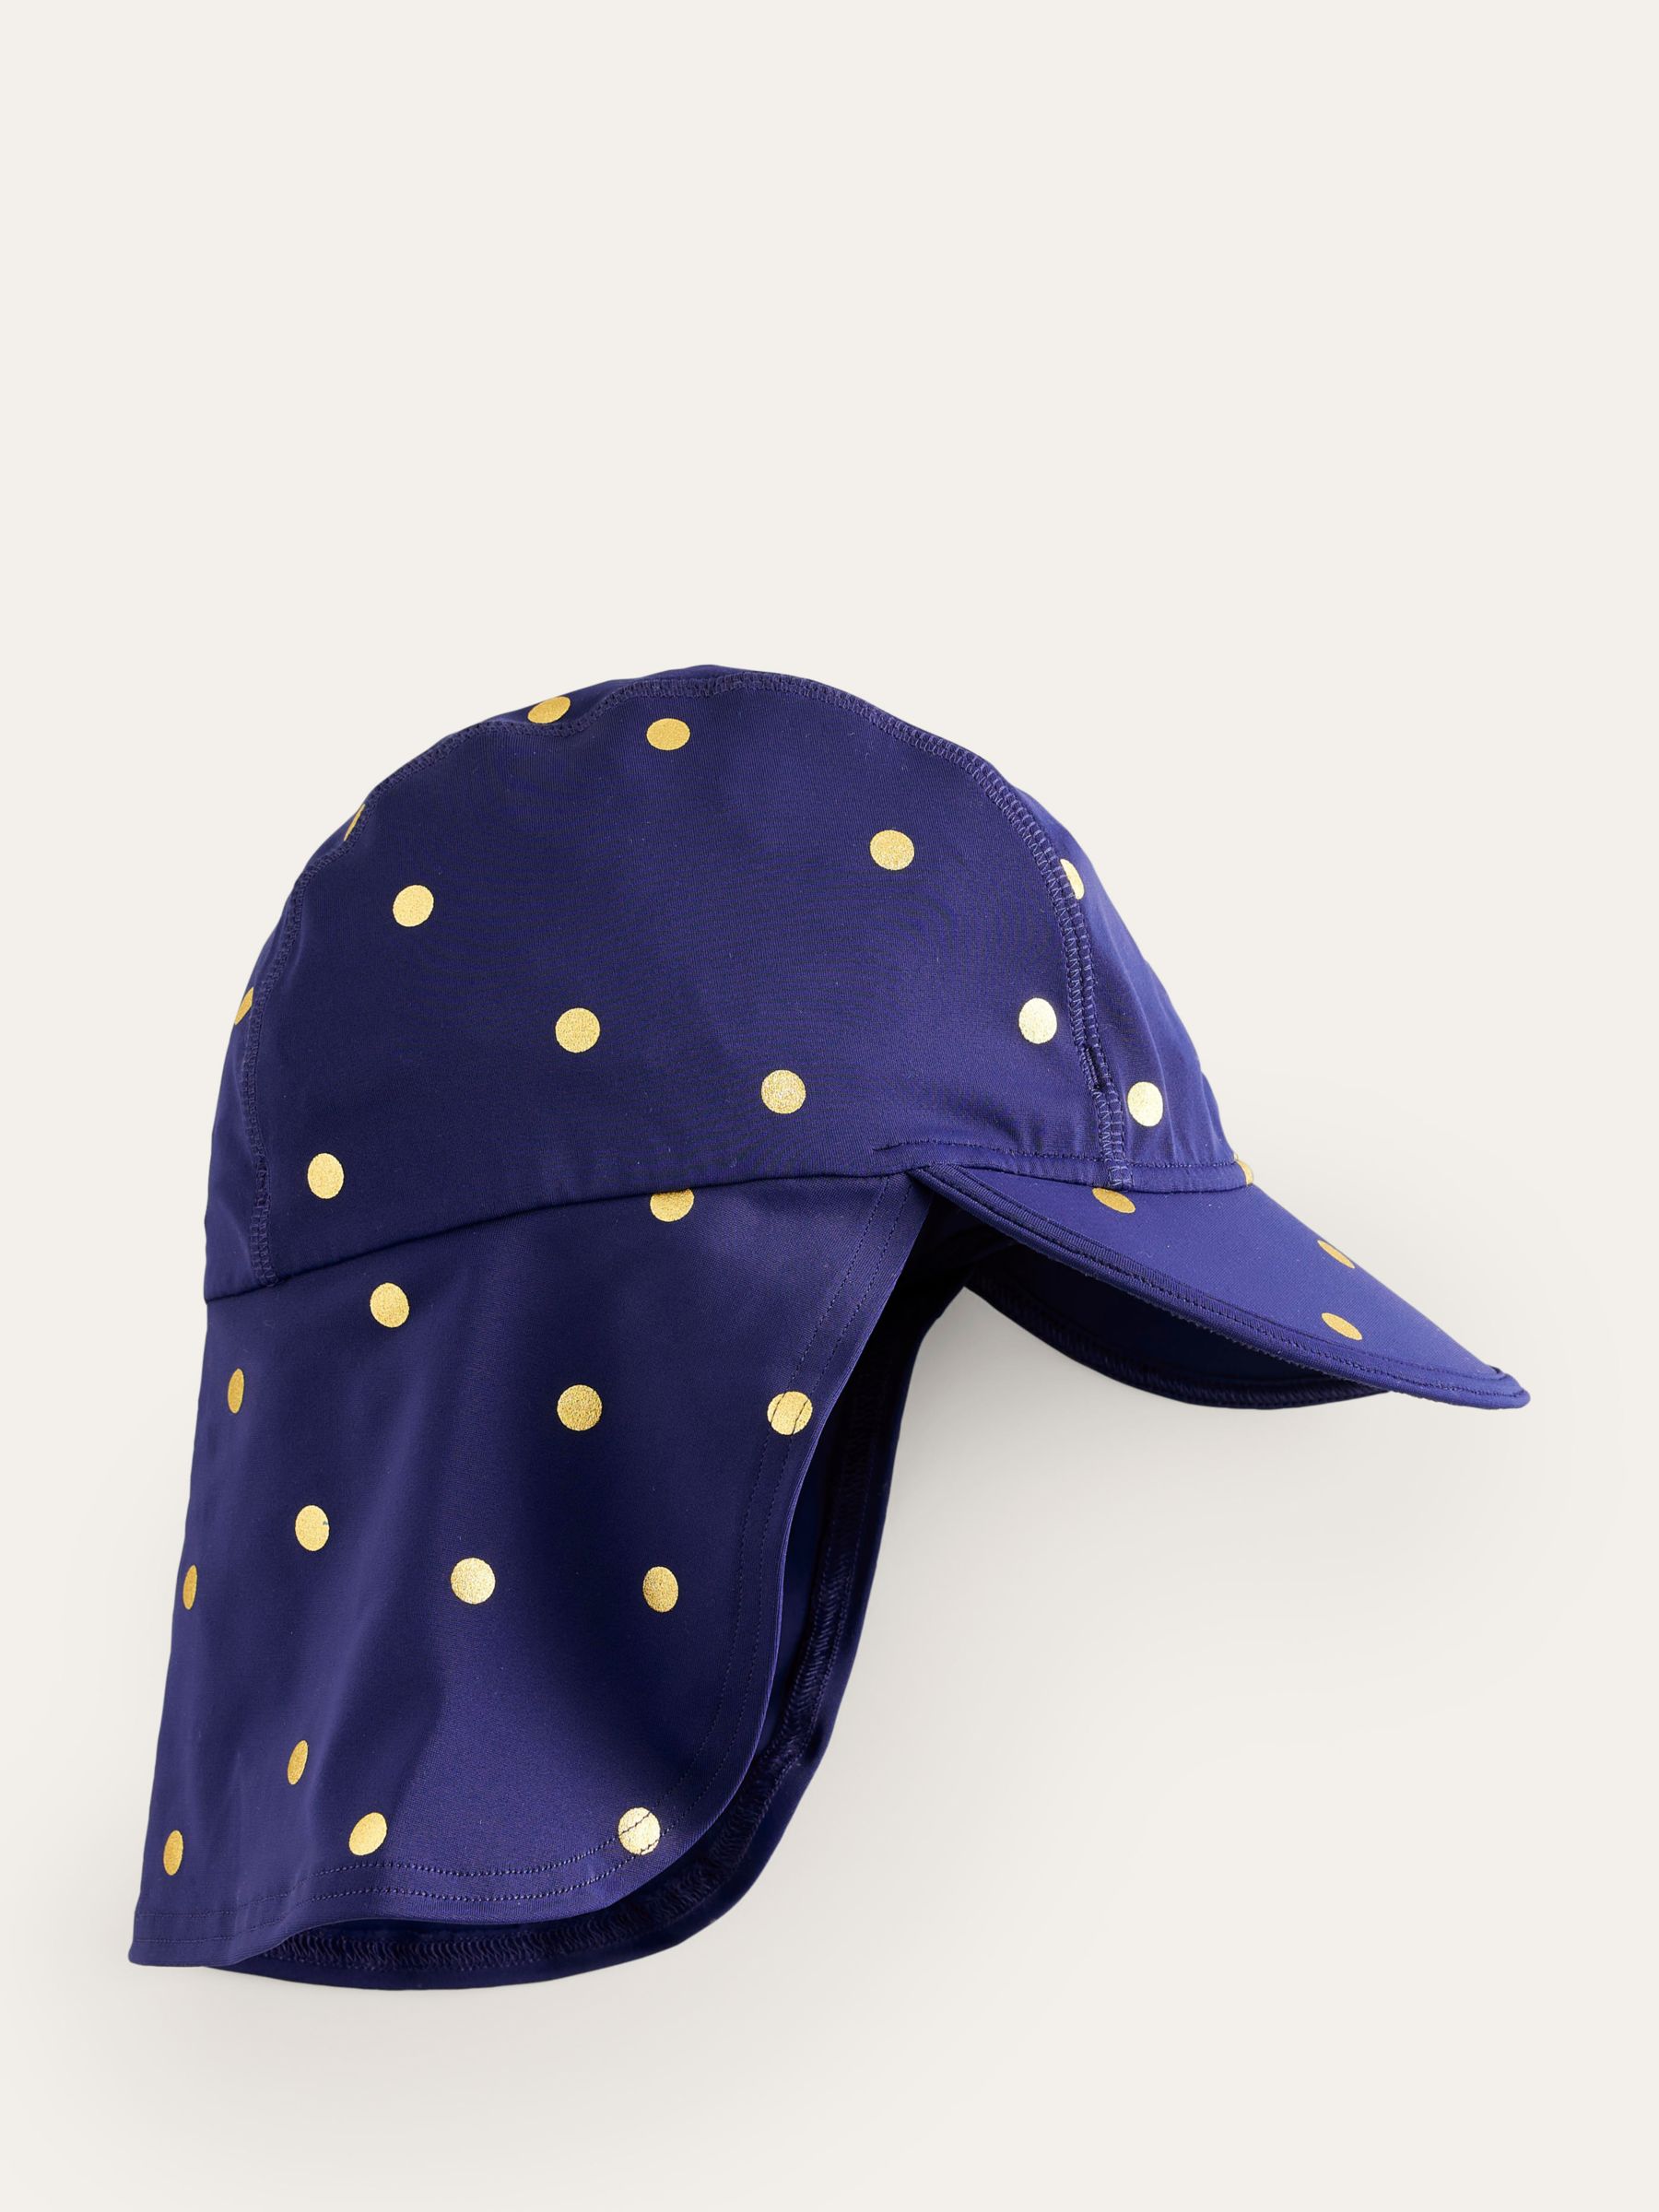 Mini Boden Kids' Spot Printed Sun-Safe Swim Hat, Navy/Foil, 12-24 months